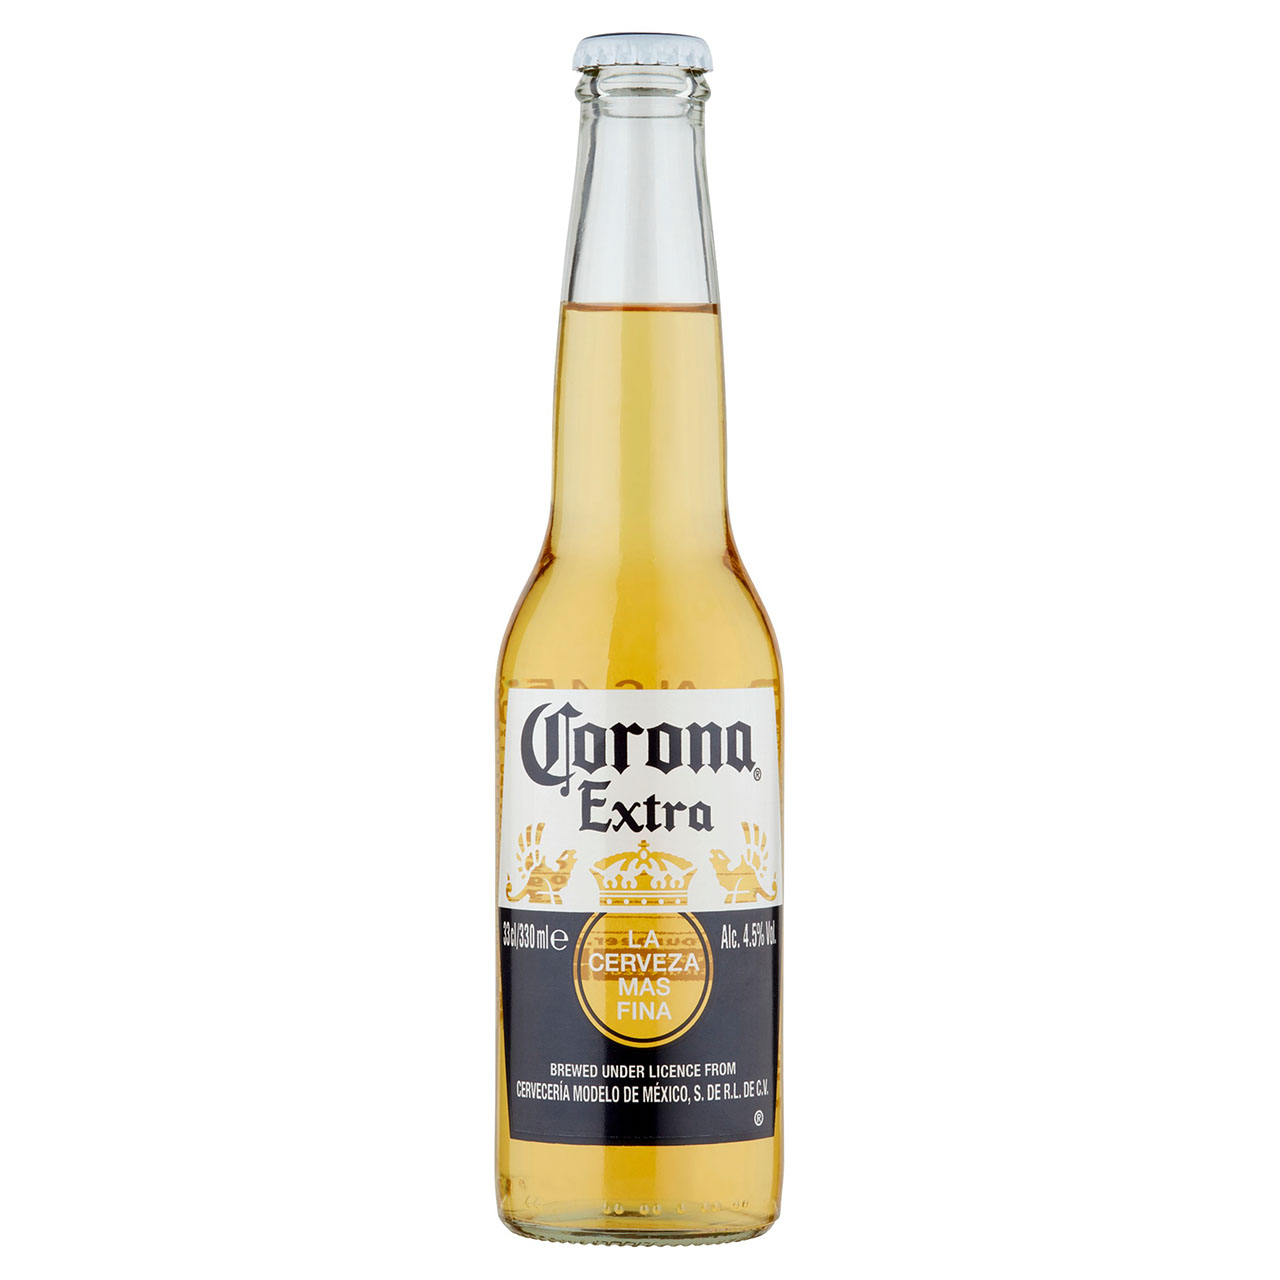 Birra Corona Extra 33 cl in vendita online